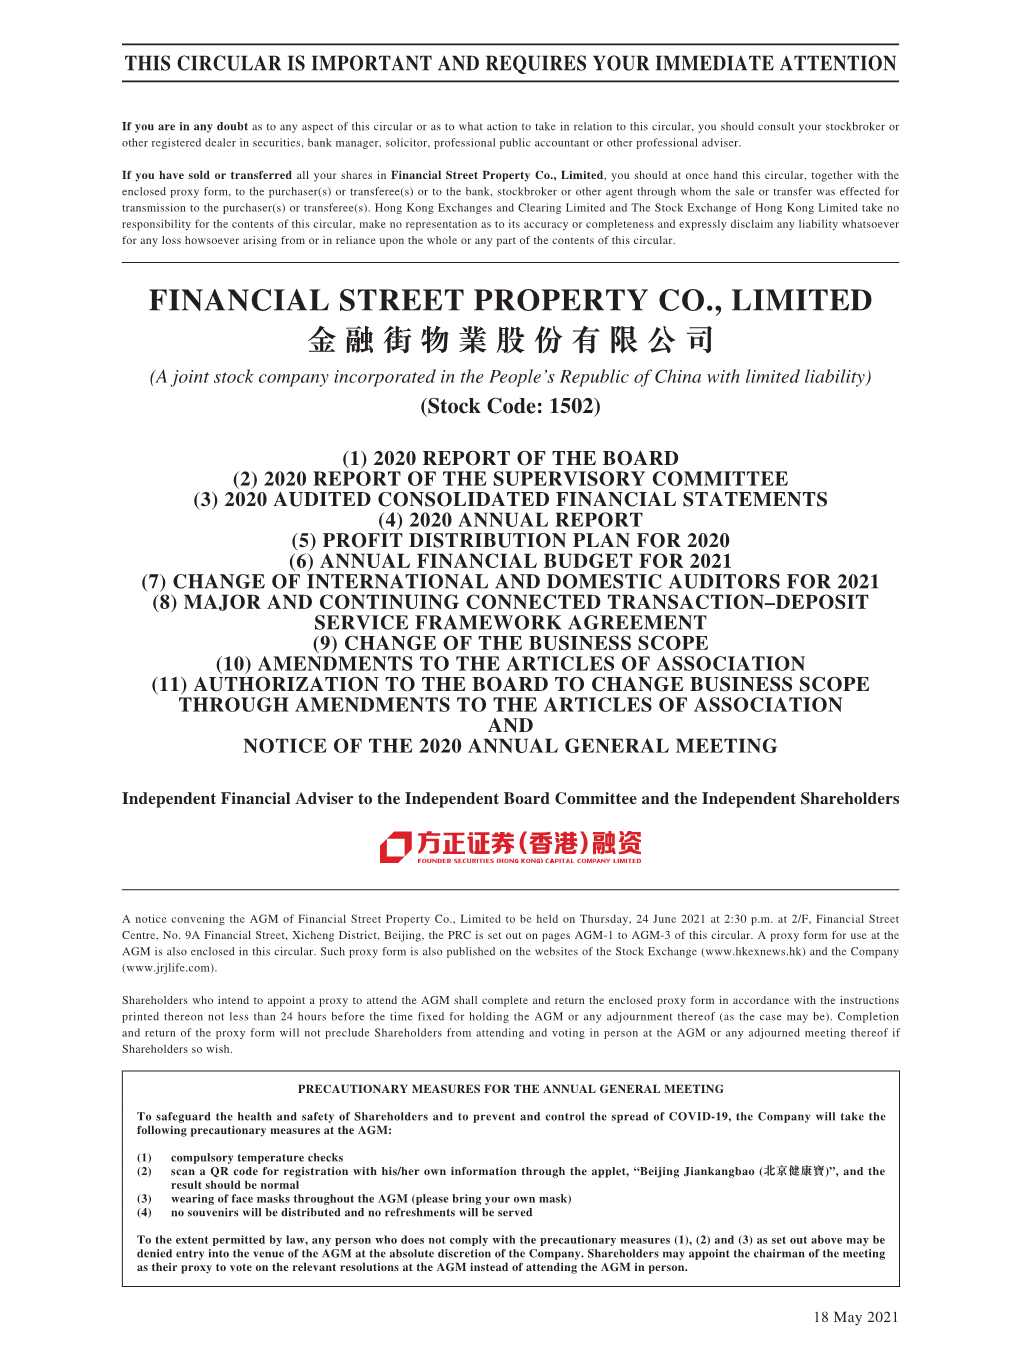 Financial Street Property Co